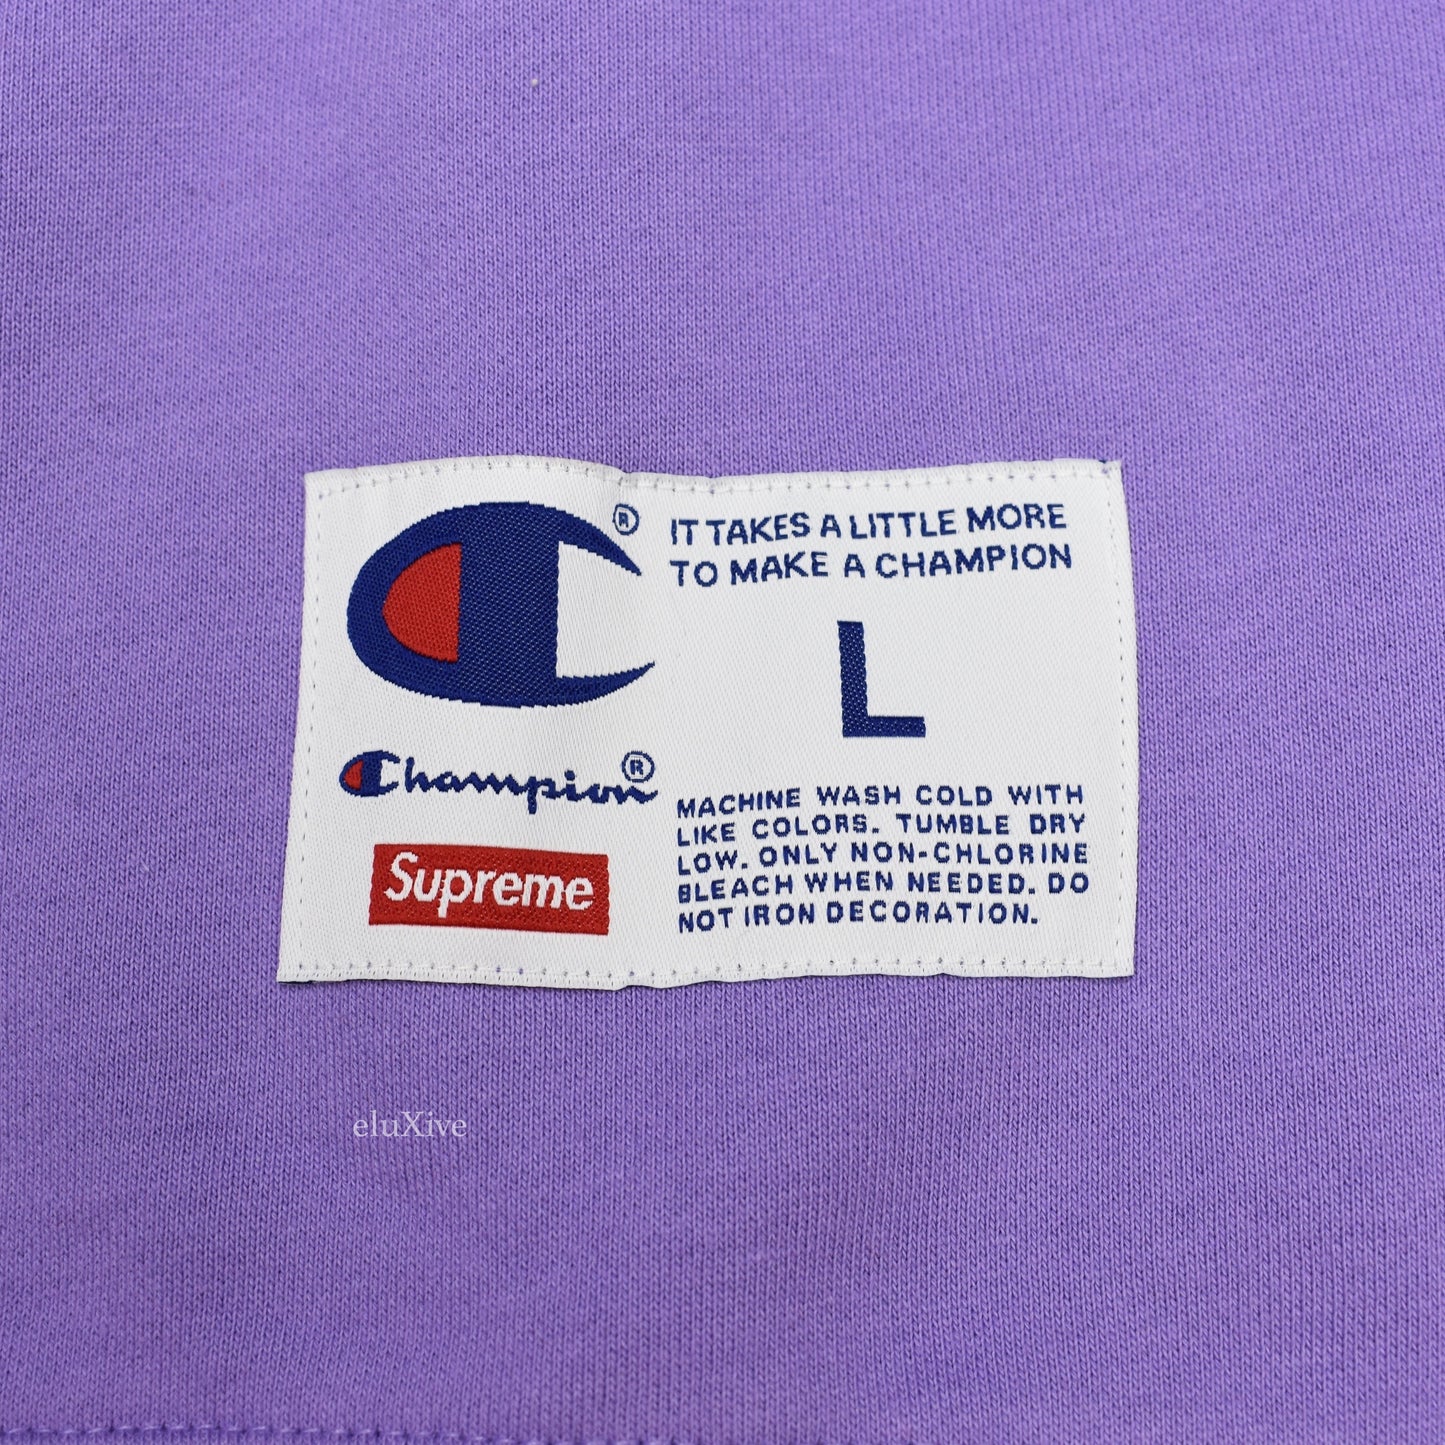 Supreme x Champion - Purple 'Stay in School' Logo Sweatshirt